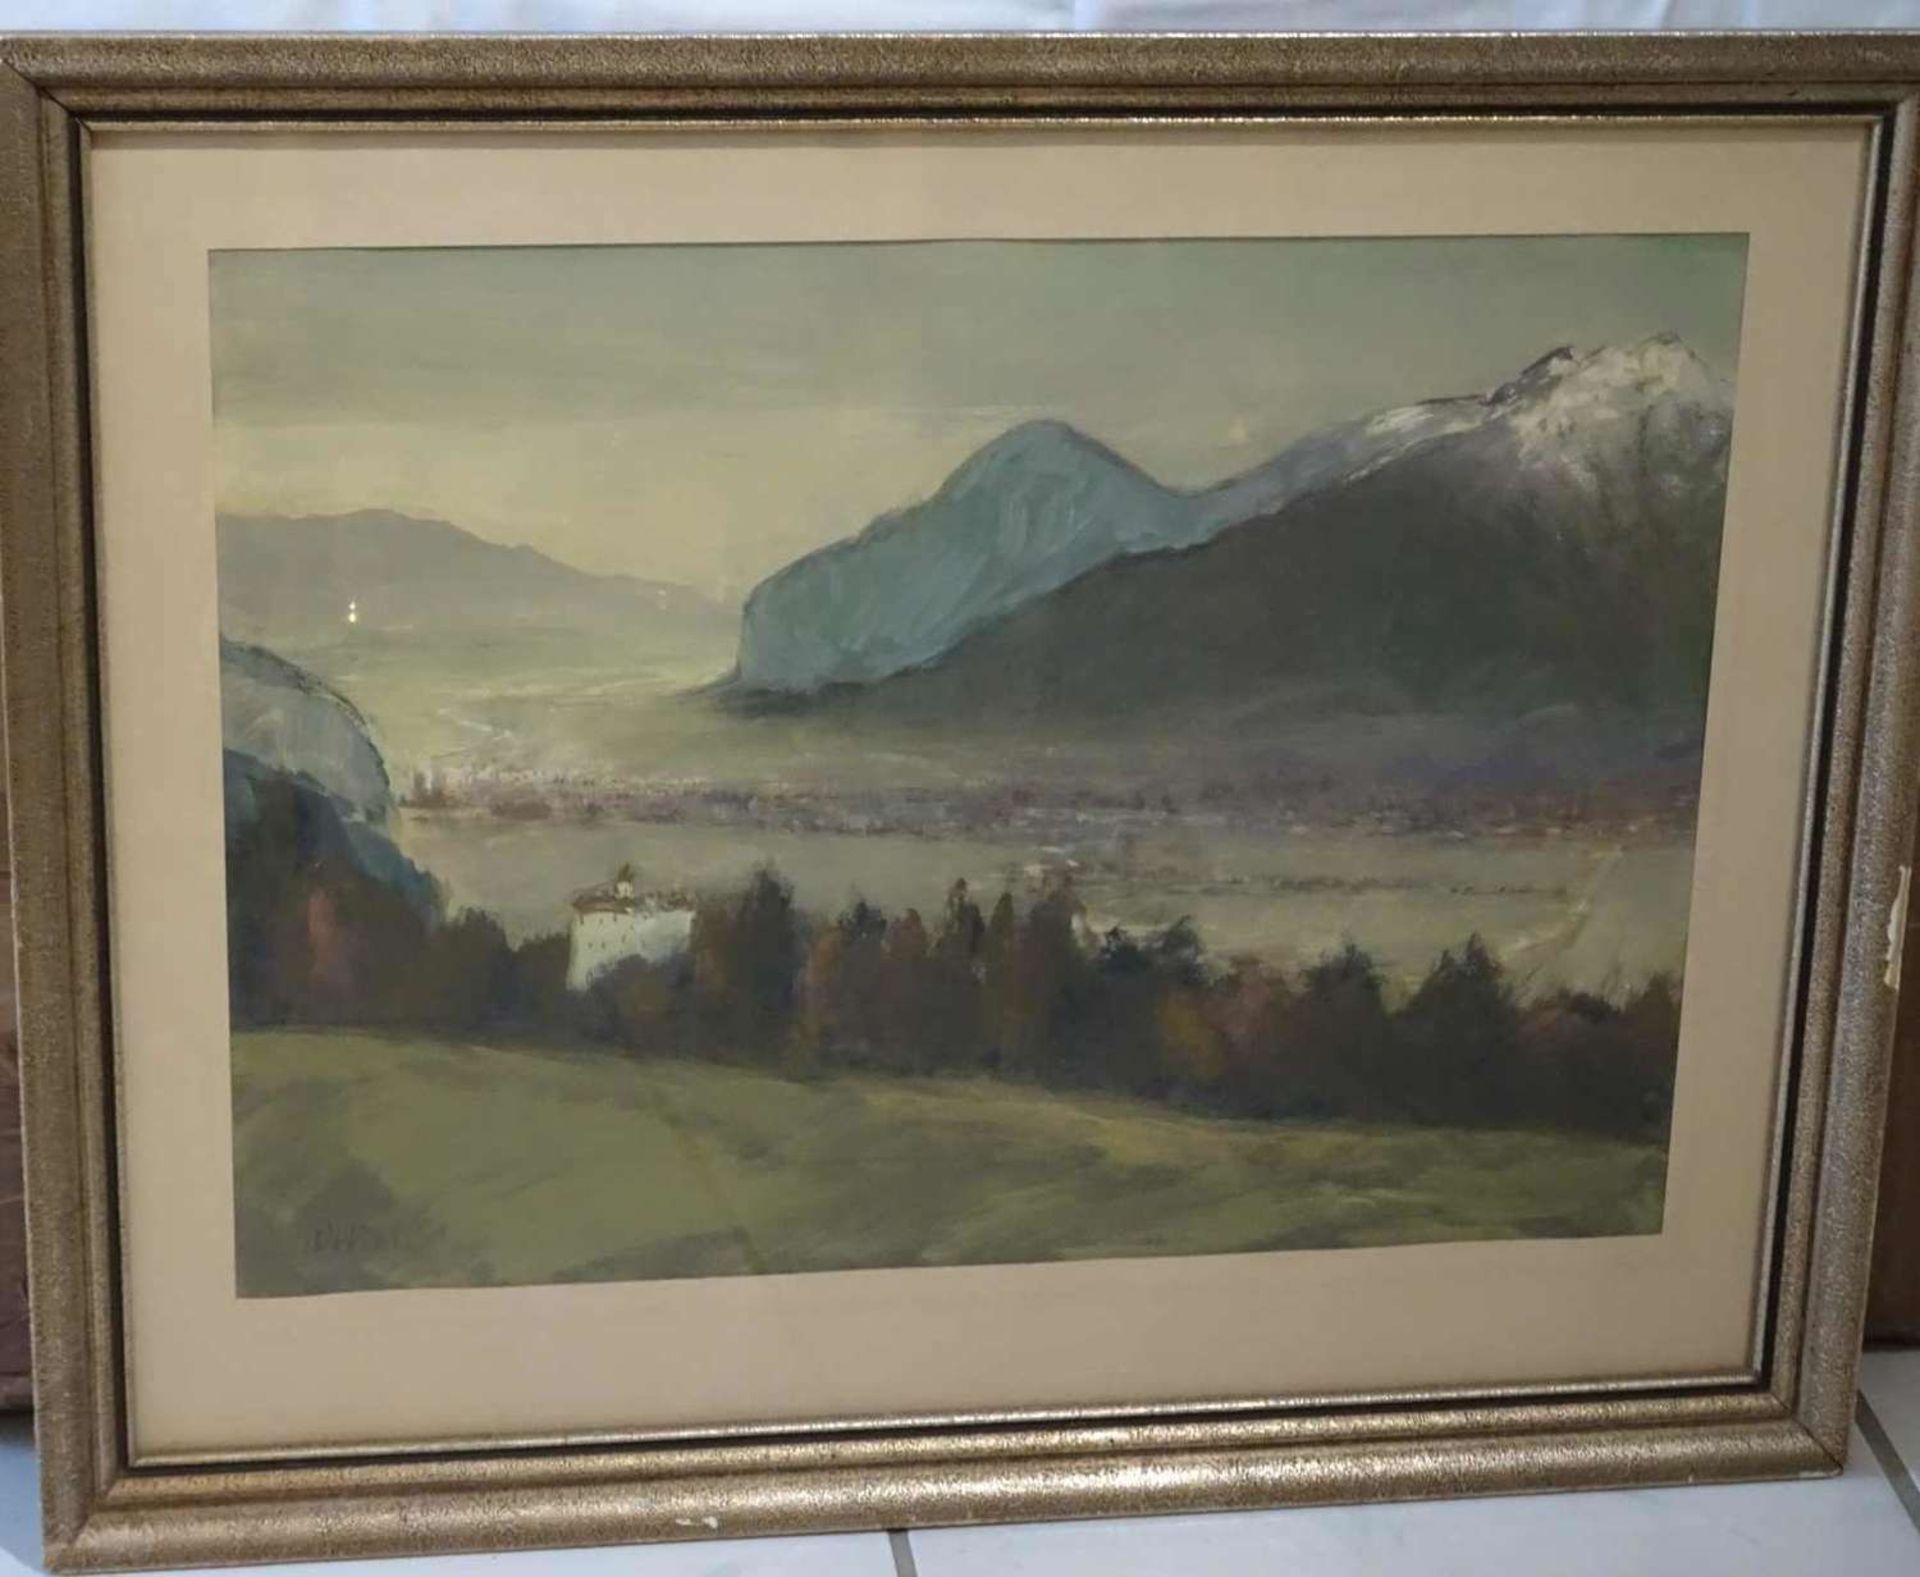 Raimund Wörle (1896-1979), Ölgemälde auf Papier (Öltempera) "Innsbruck", links unten Signatur R